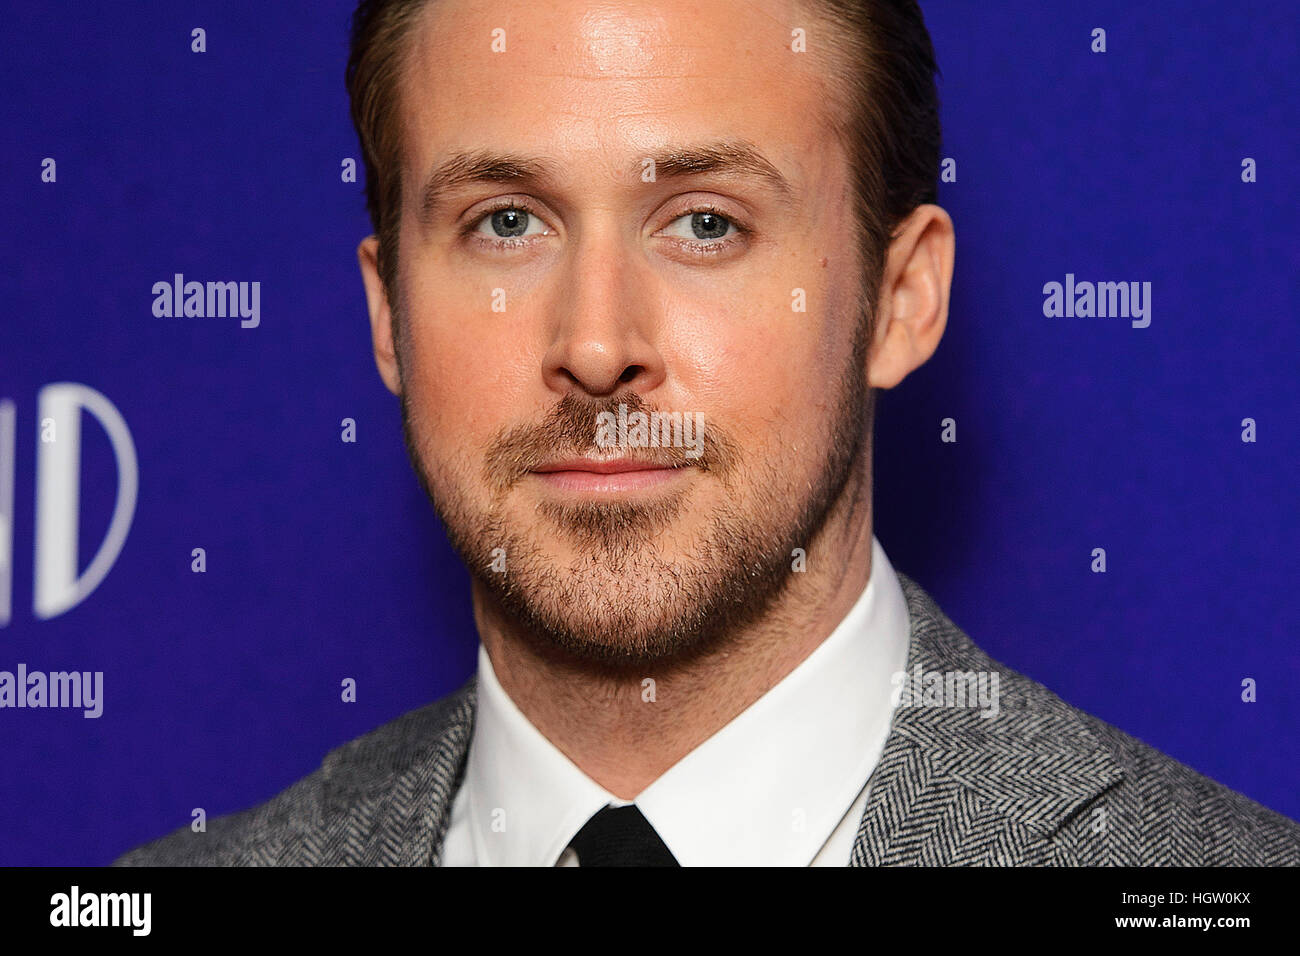 Ryan Gosling and Emma Stone attending a gala screening for La La Land held  at Ham Yard Hotel, London Stock Photo - Alamy